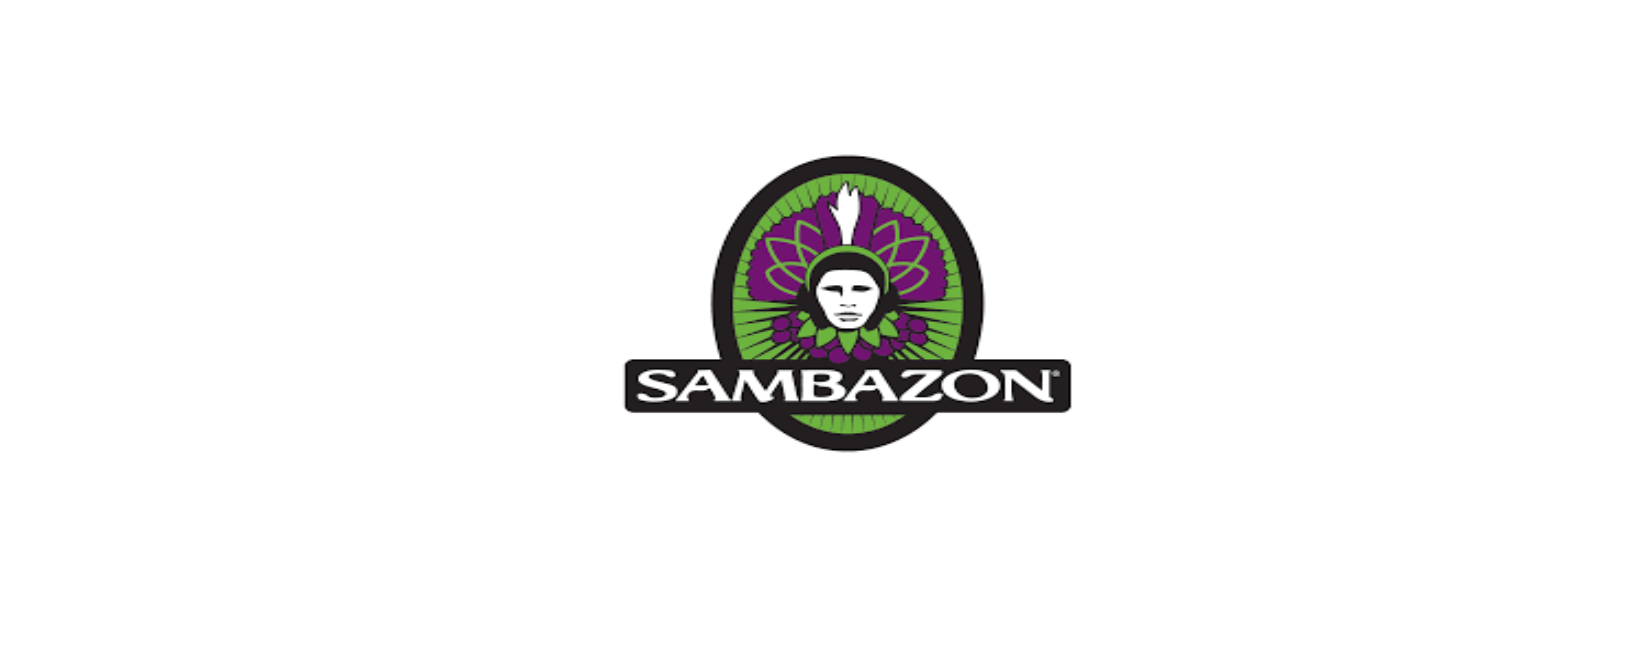 SAMBAZON Discount Code 2022